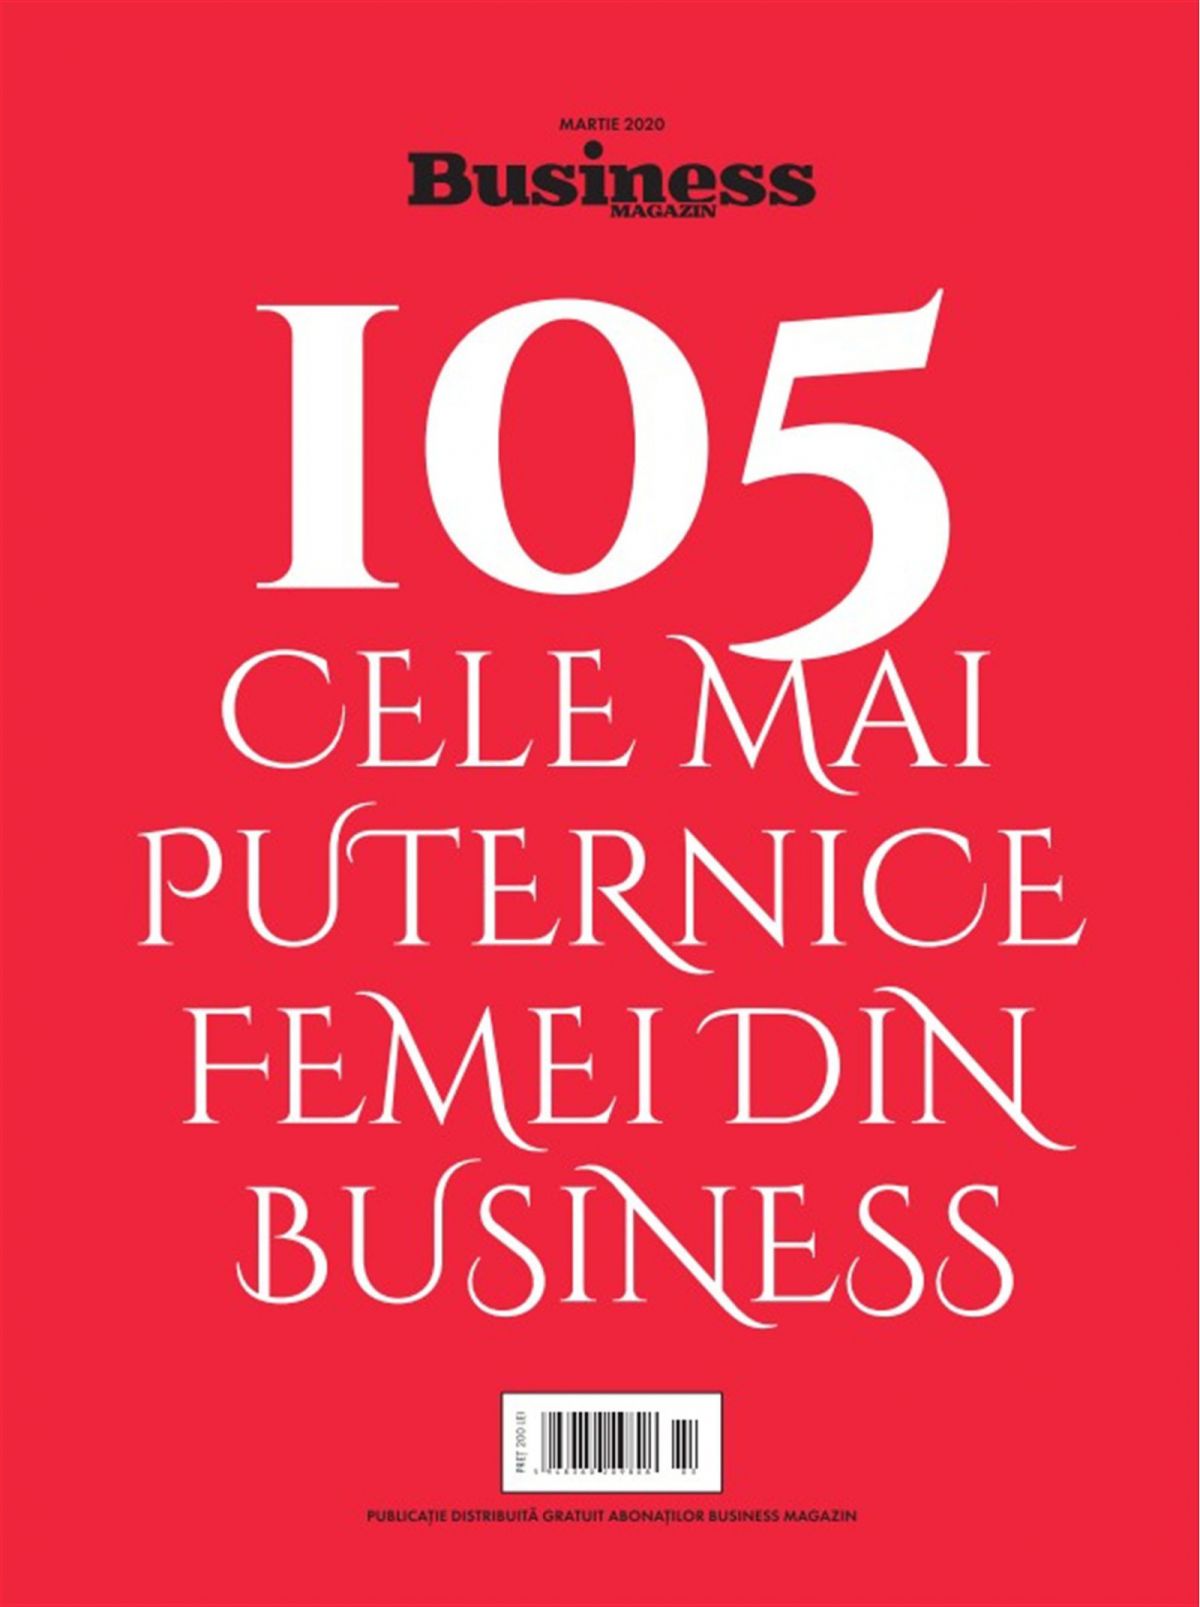 Business Magazin: 105 most powerful businesswomen